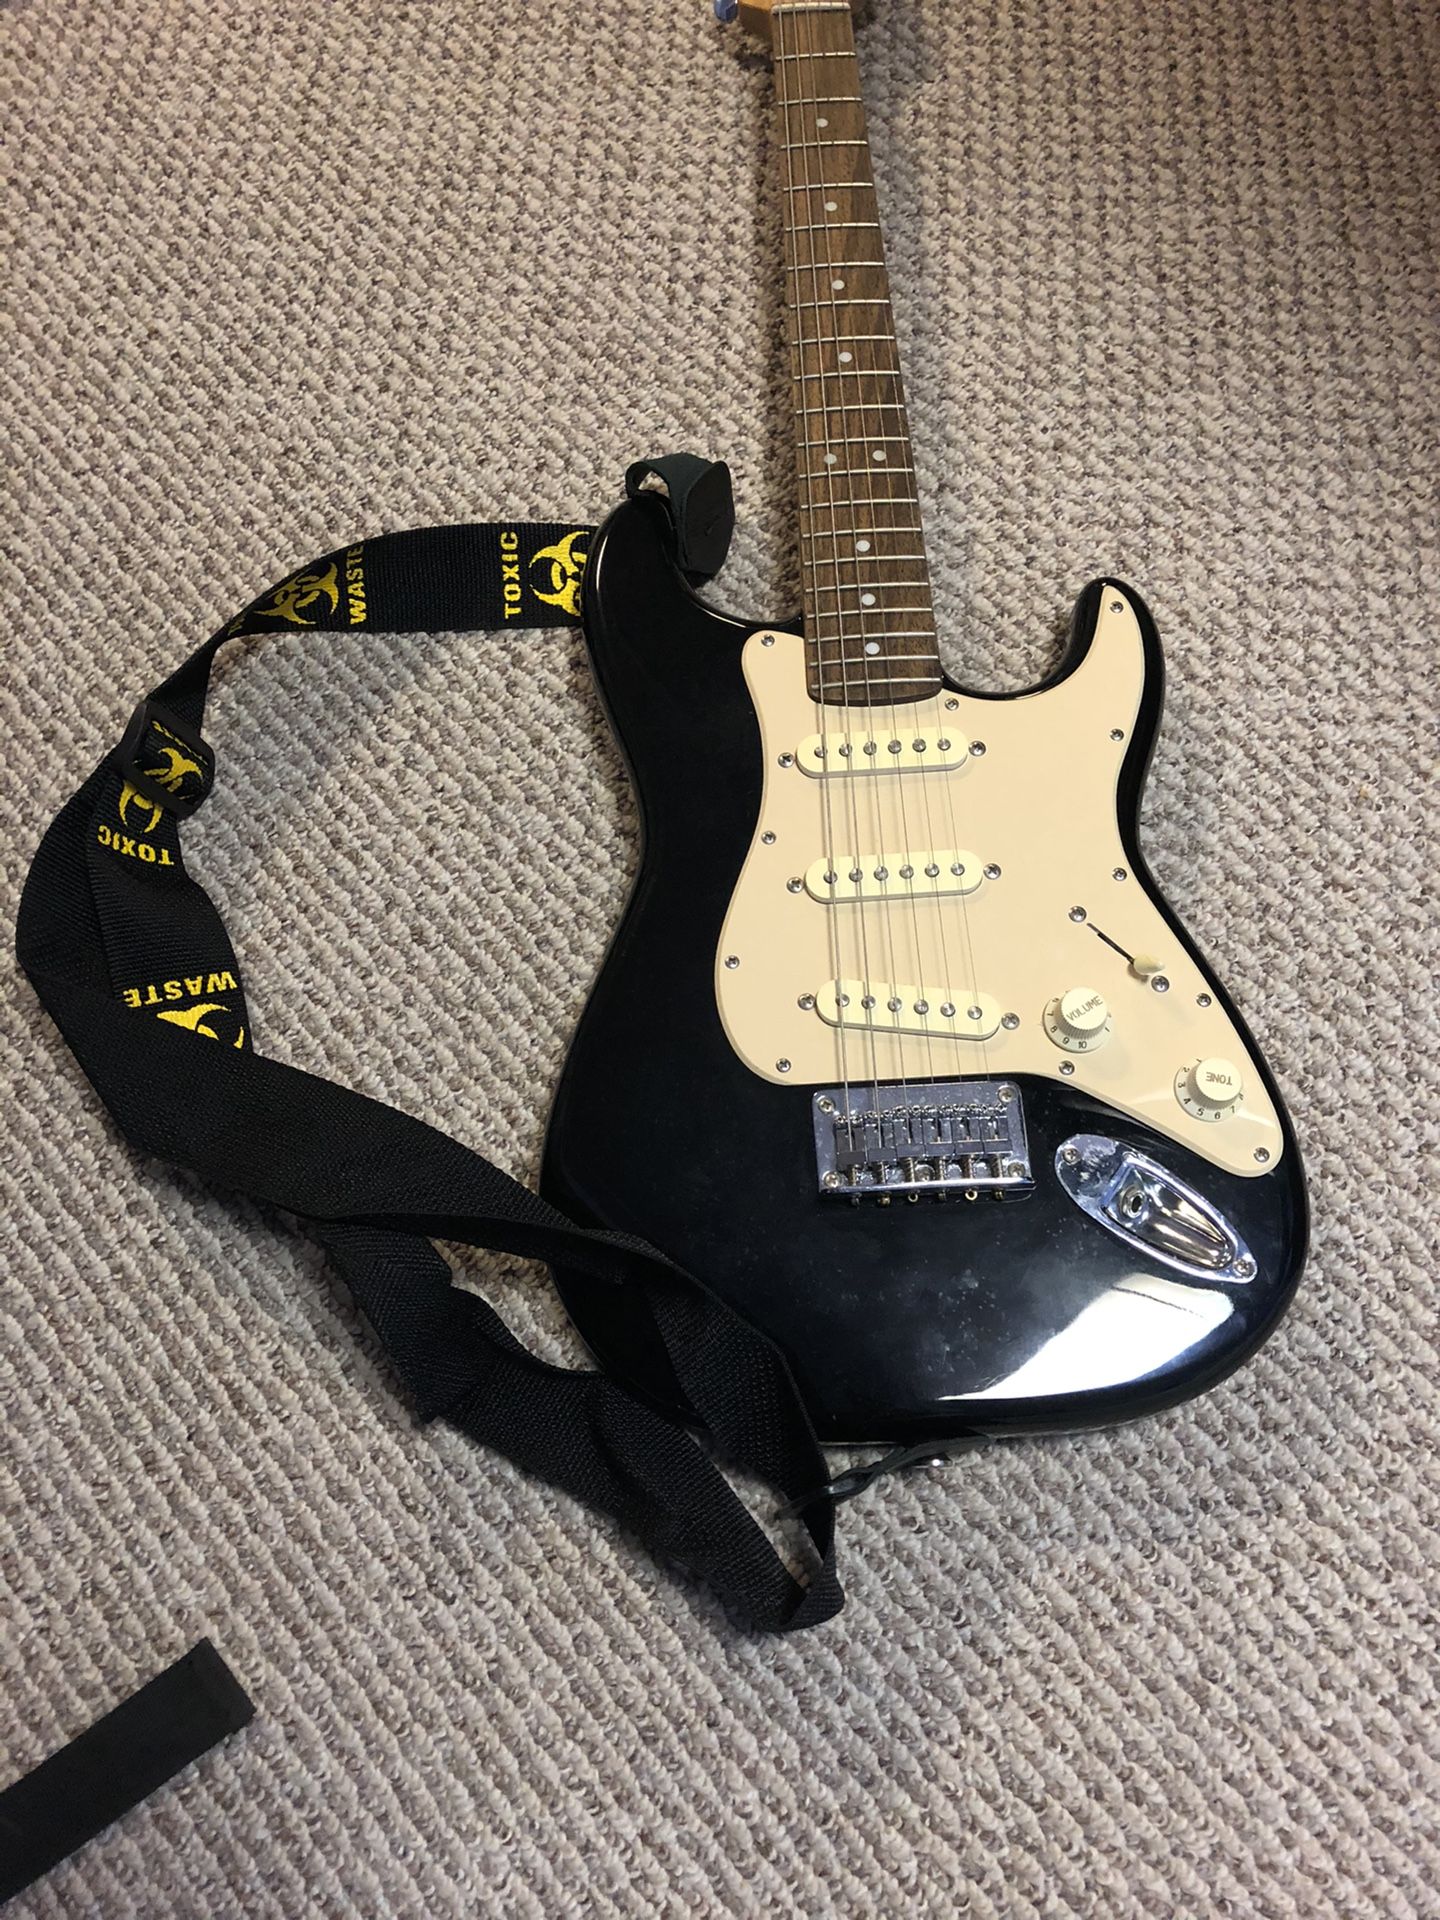 Fender electric guitar